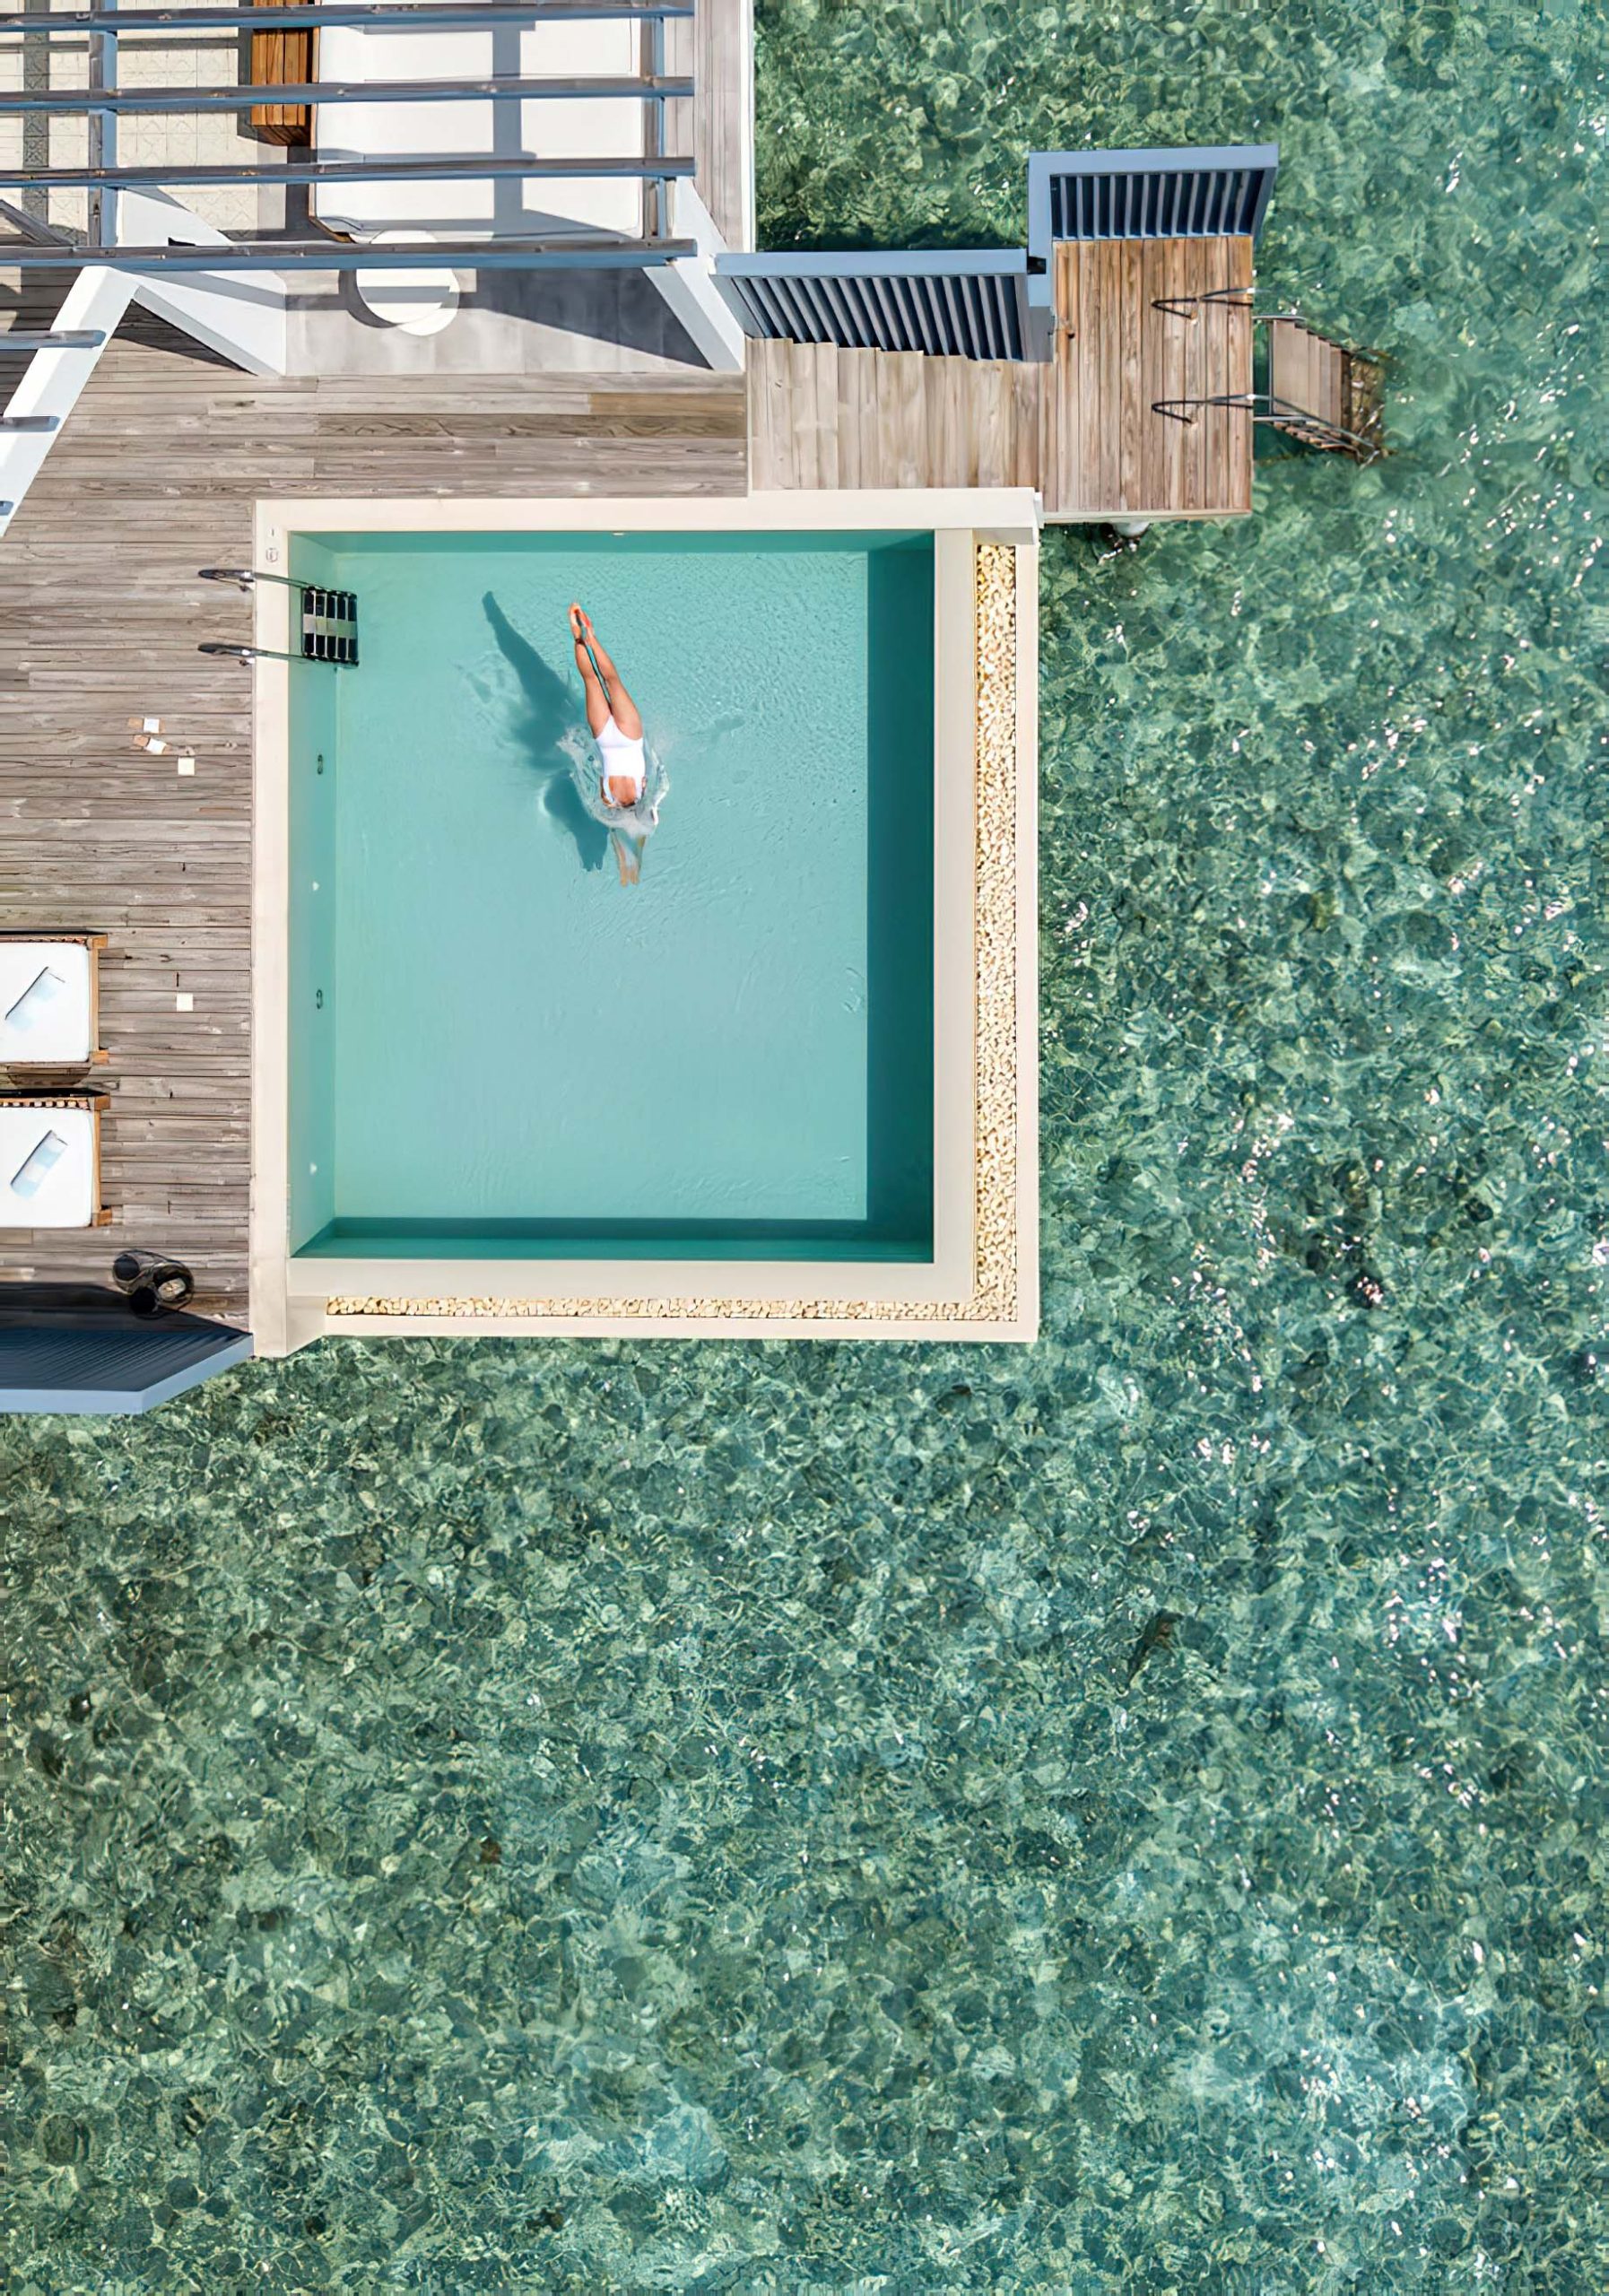 Amilla Fushi Resort and Residences - Baa Atoll, Maldives - Overwater Villa Pool Overhead View